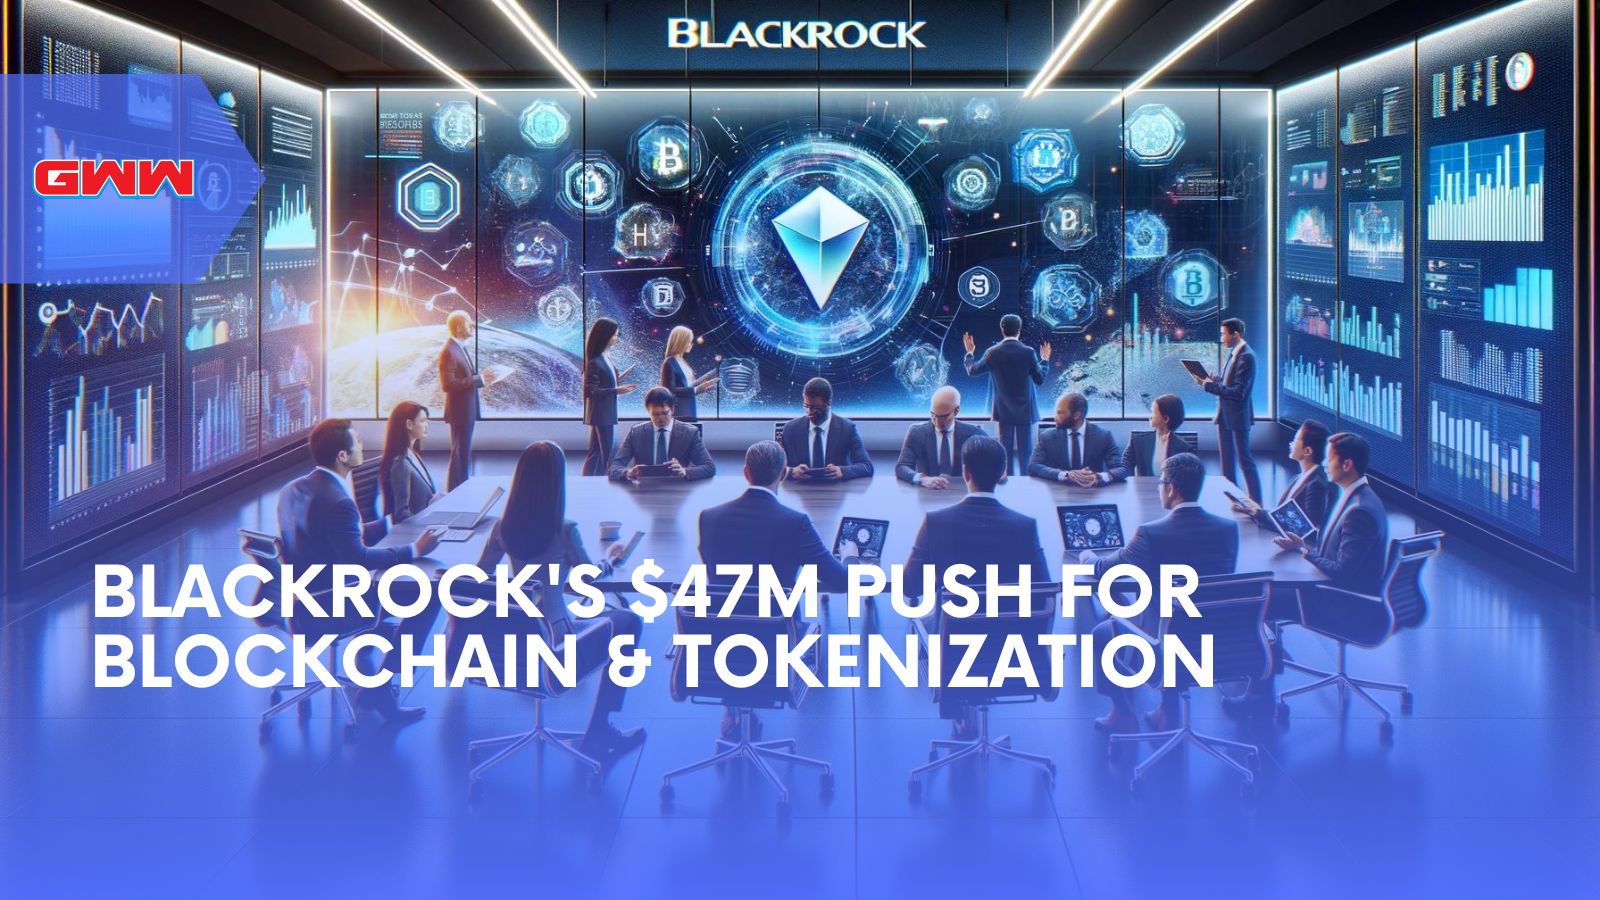 BlackRock's $47M Push for Blockchain & Tokenization